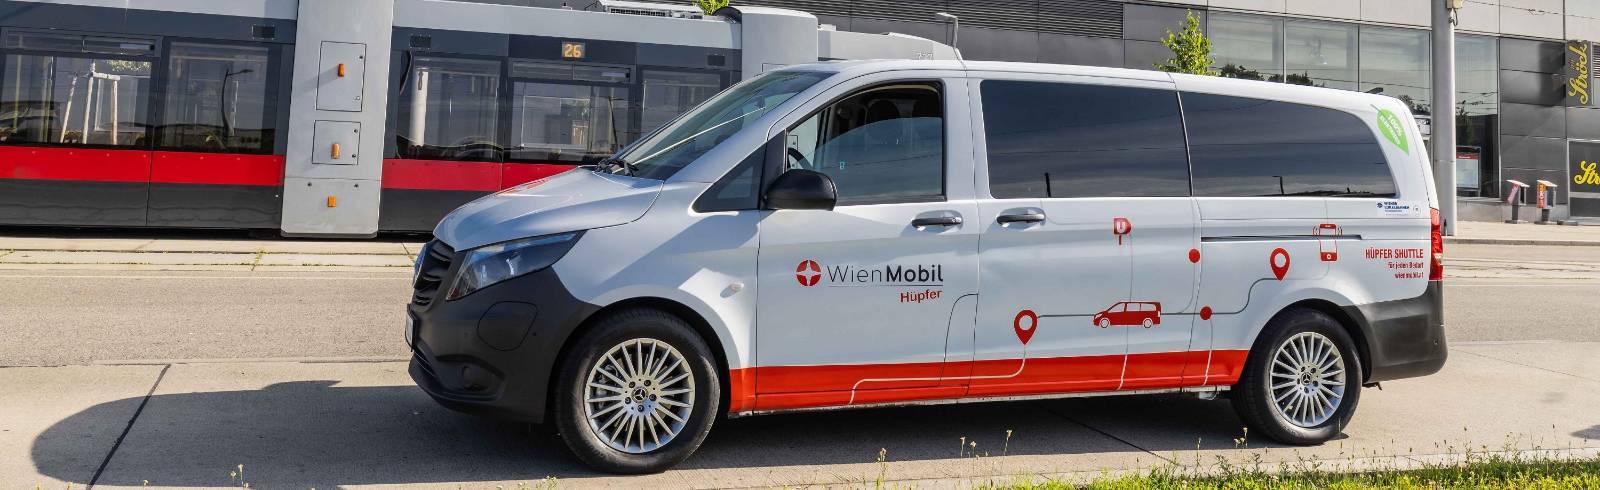 Wien Mobil Hüpfer: Ab Schulbeginn in Donaustadt